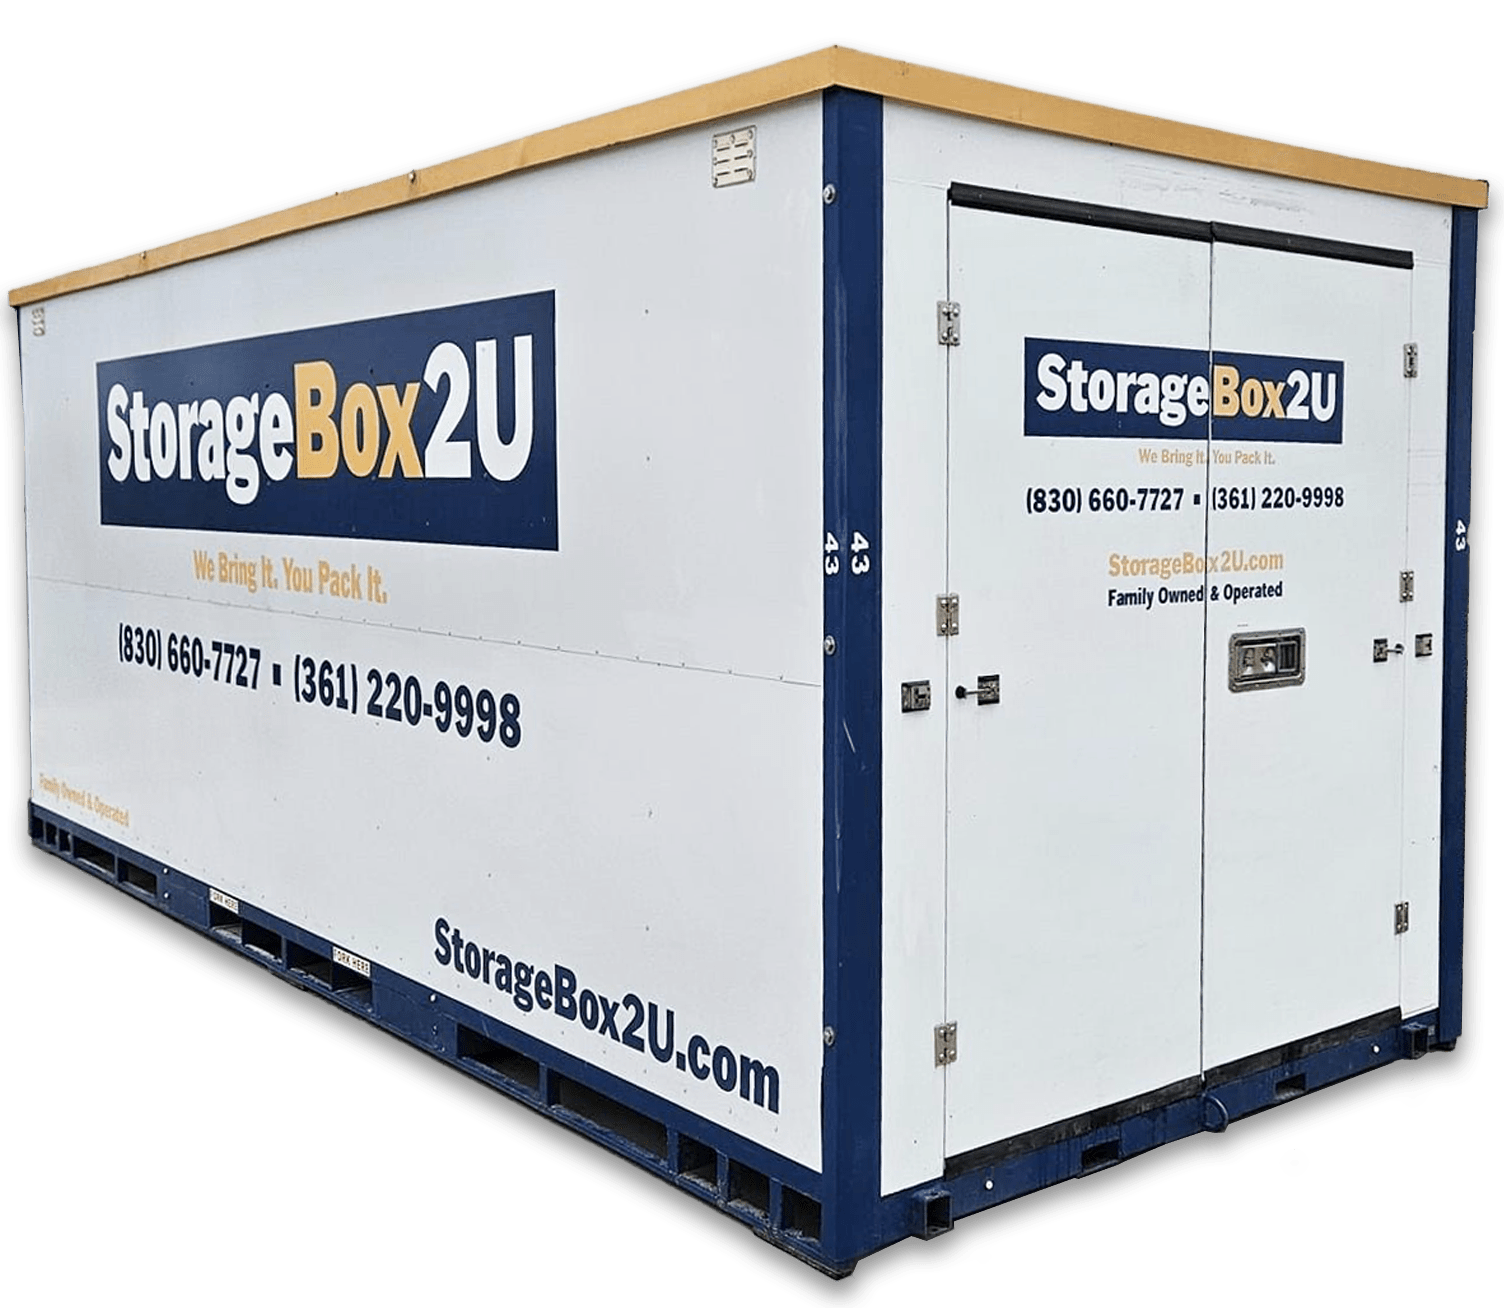 StorageBox2U